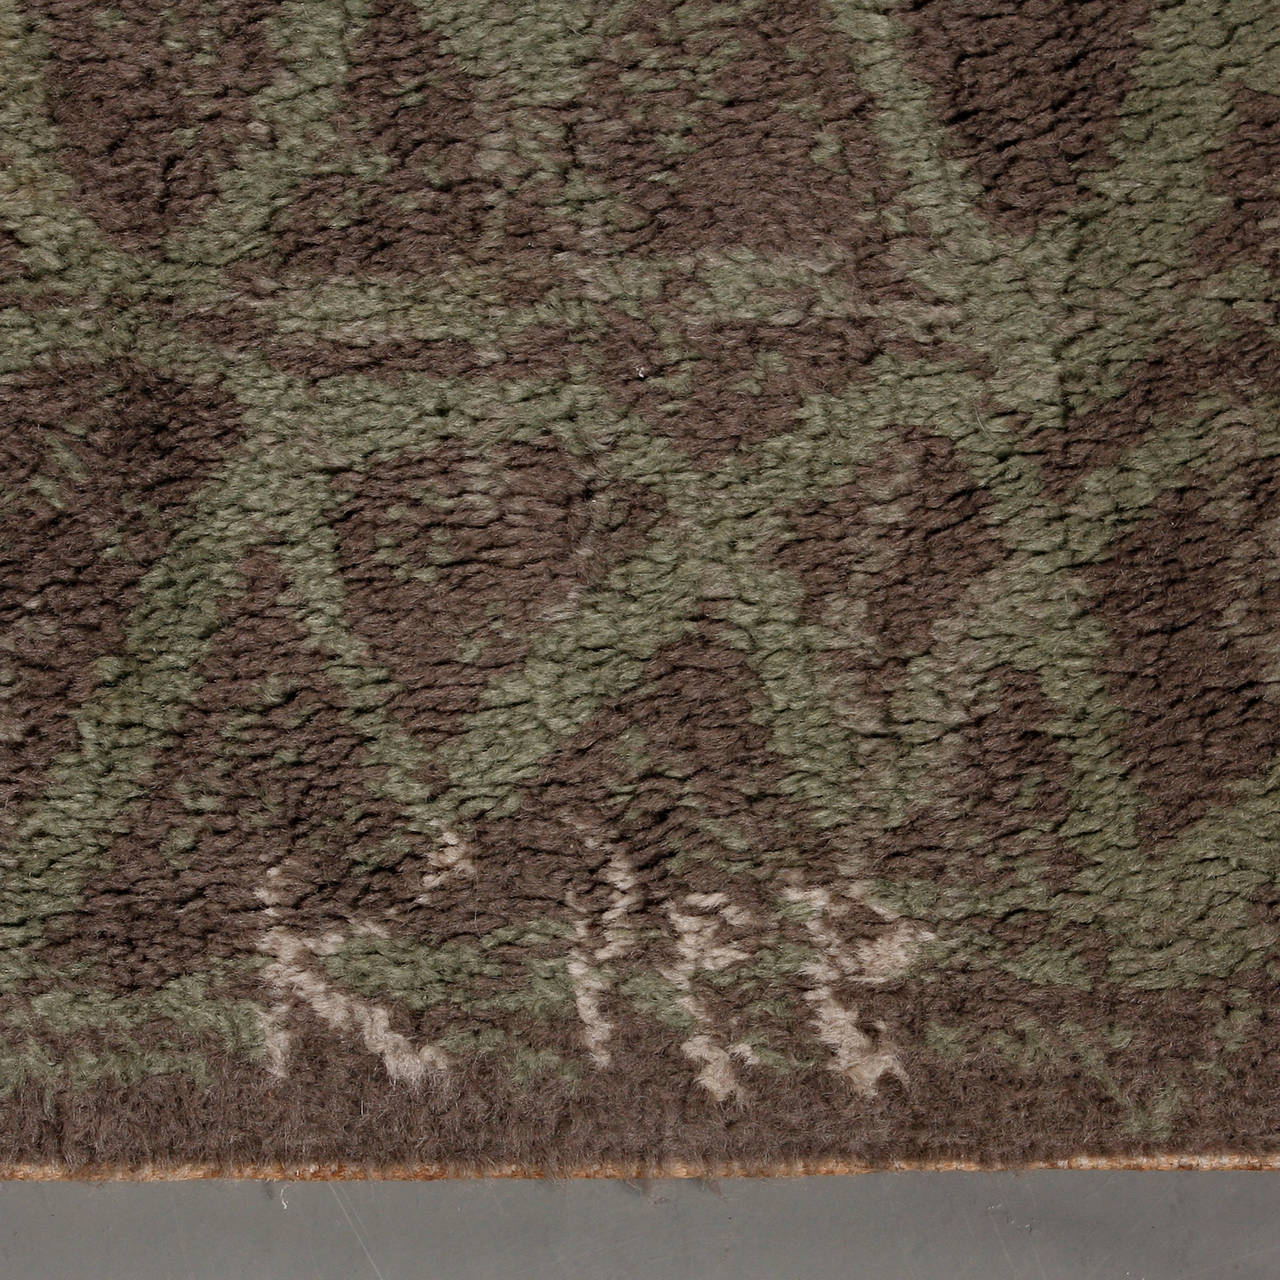 Paul Klee Carpet 1